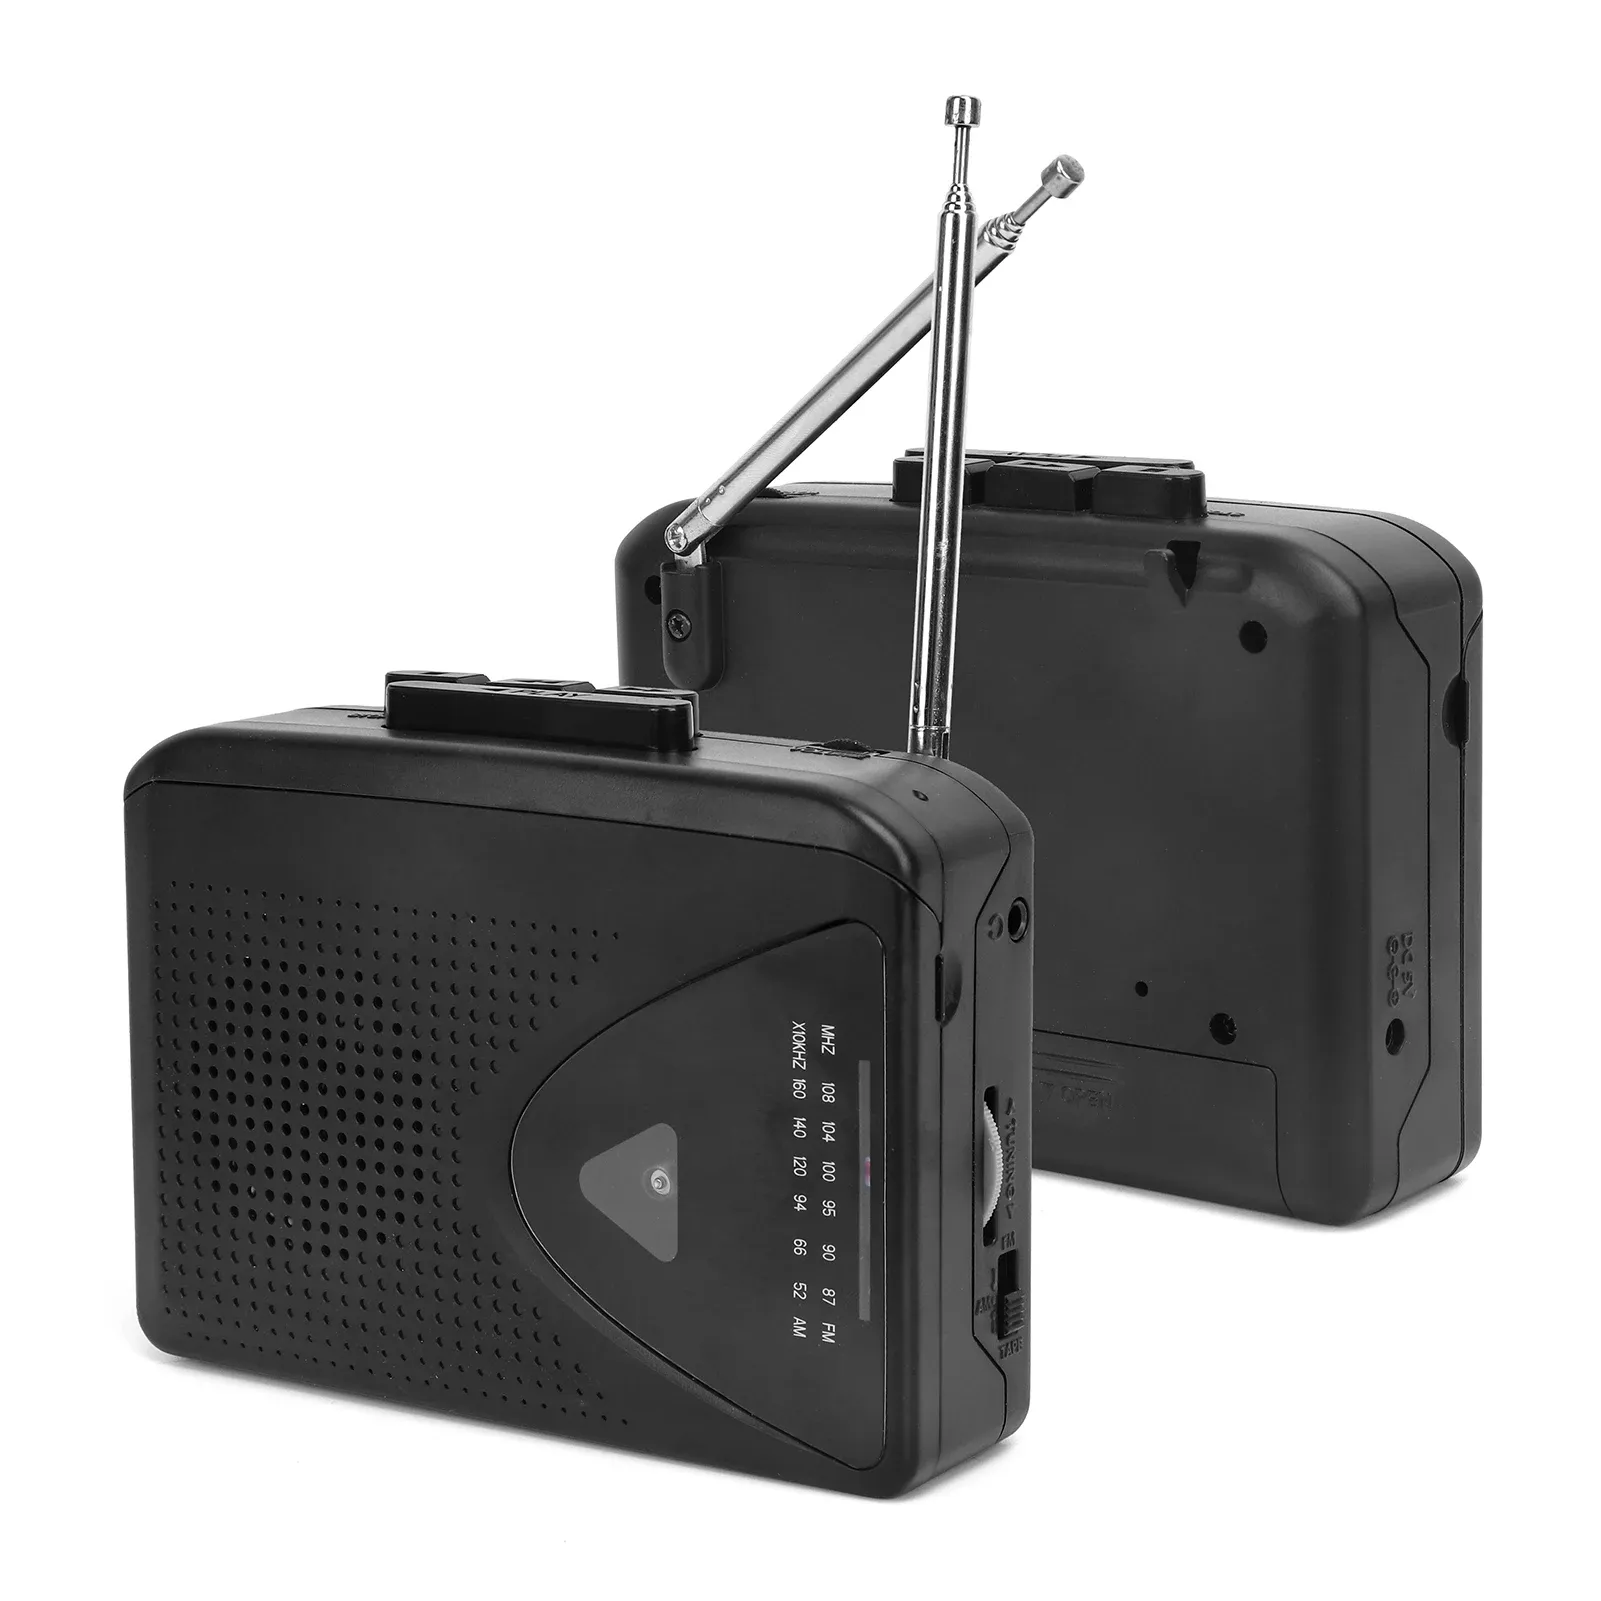 Radio Portable Cassette Player Personal Walkman AM/FM Radio with 3.5mm Eeadphone Jack